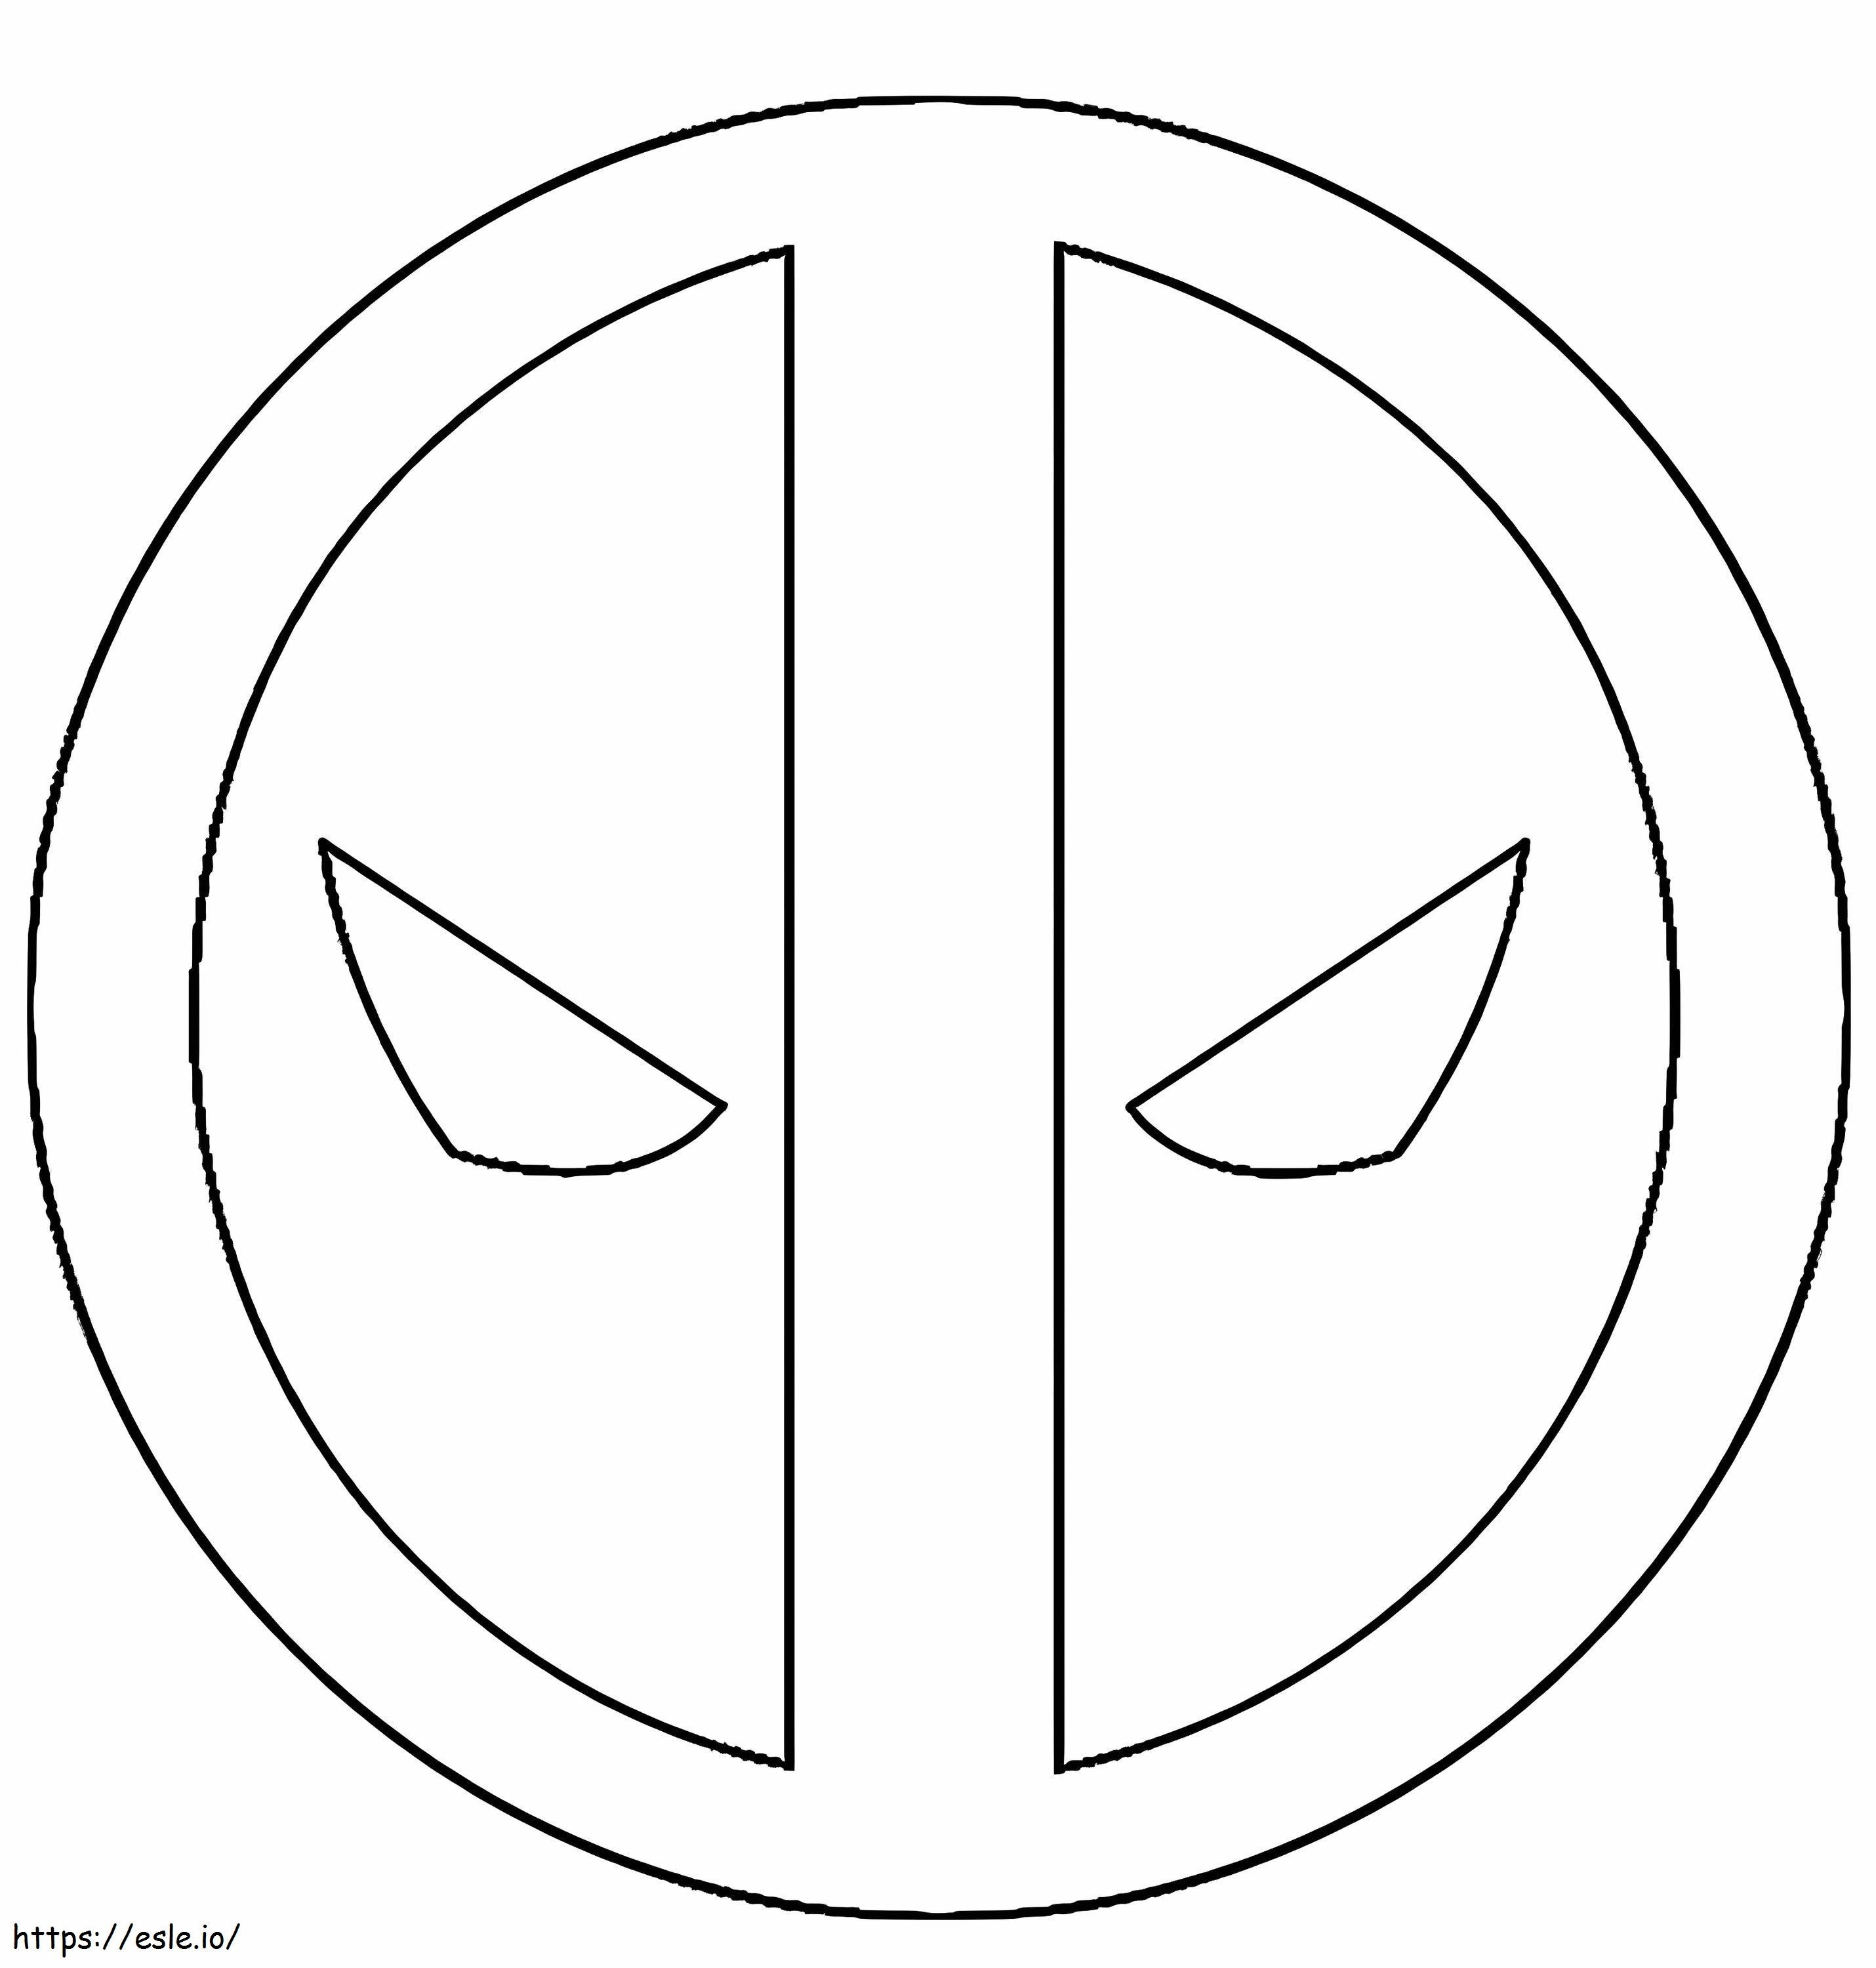 Coloriage Symbole Le Deadpool à imprimer dessin